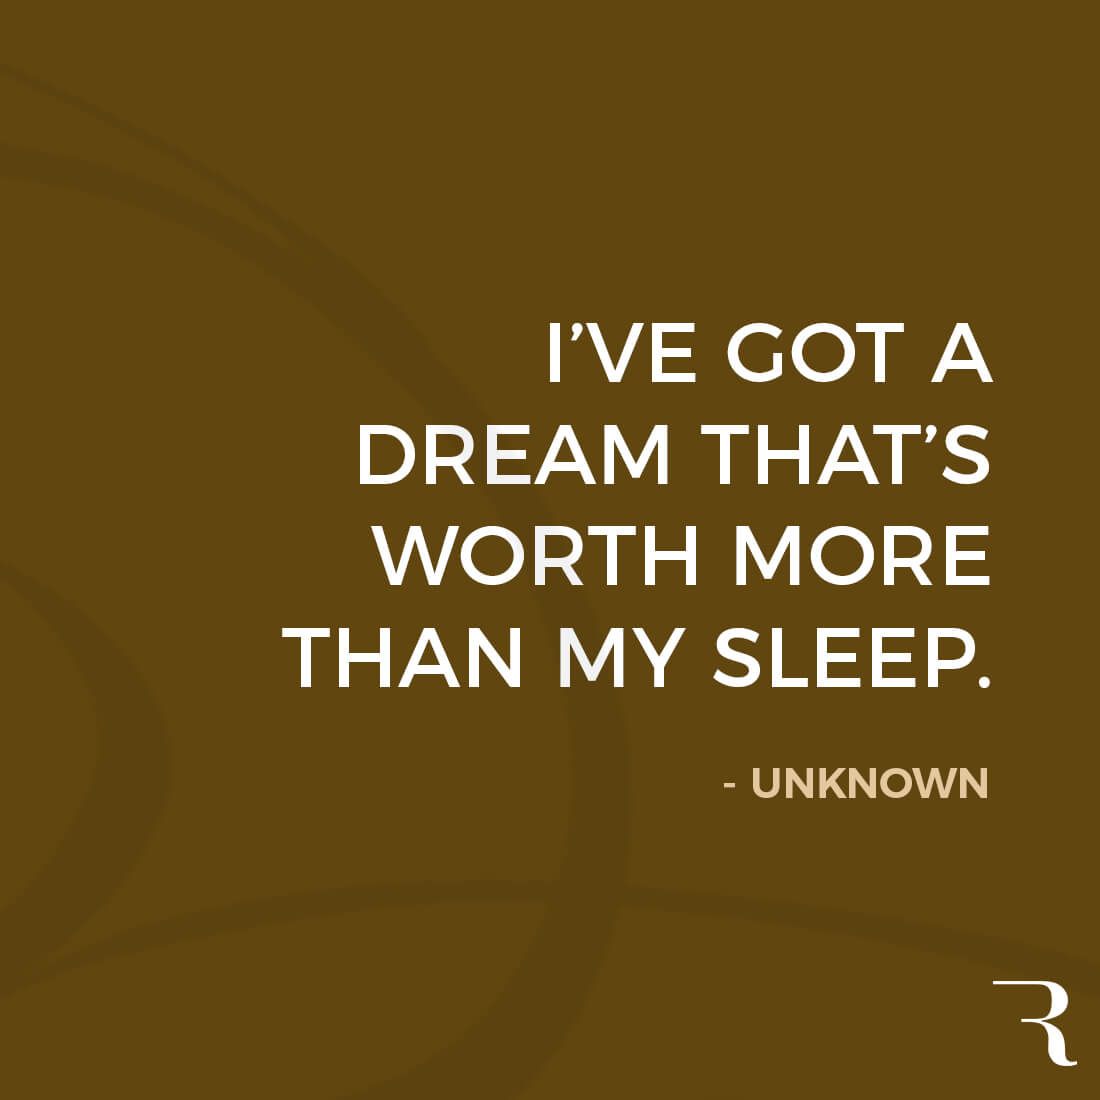 Motivational Quotes: "I've got a dream that's worth more than my sleep." 112 Motivational Quotes to Be a Better Entrepreneur